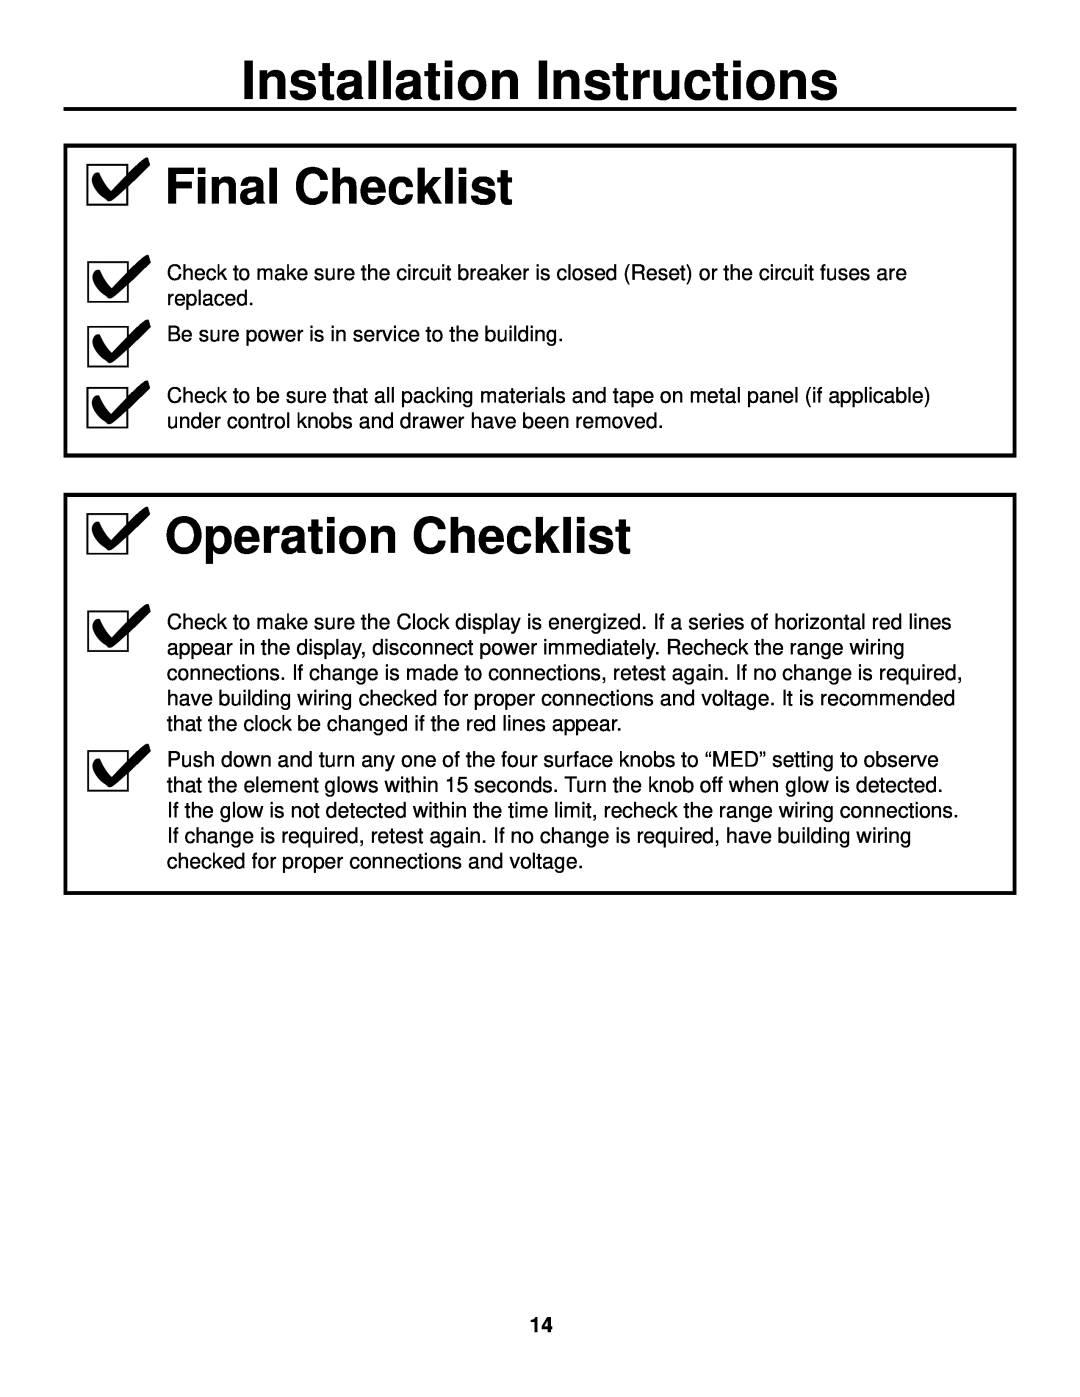 GE JS905 installation instructions Final Checklist, Operation Checklist, Installation Instructions 